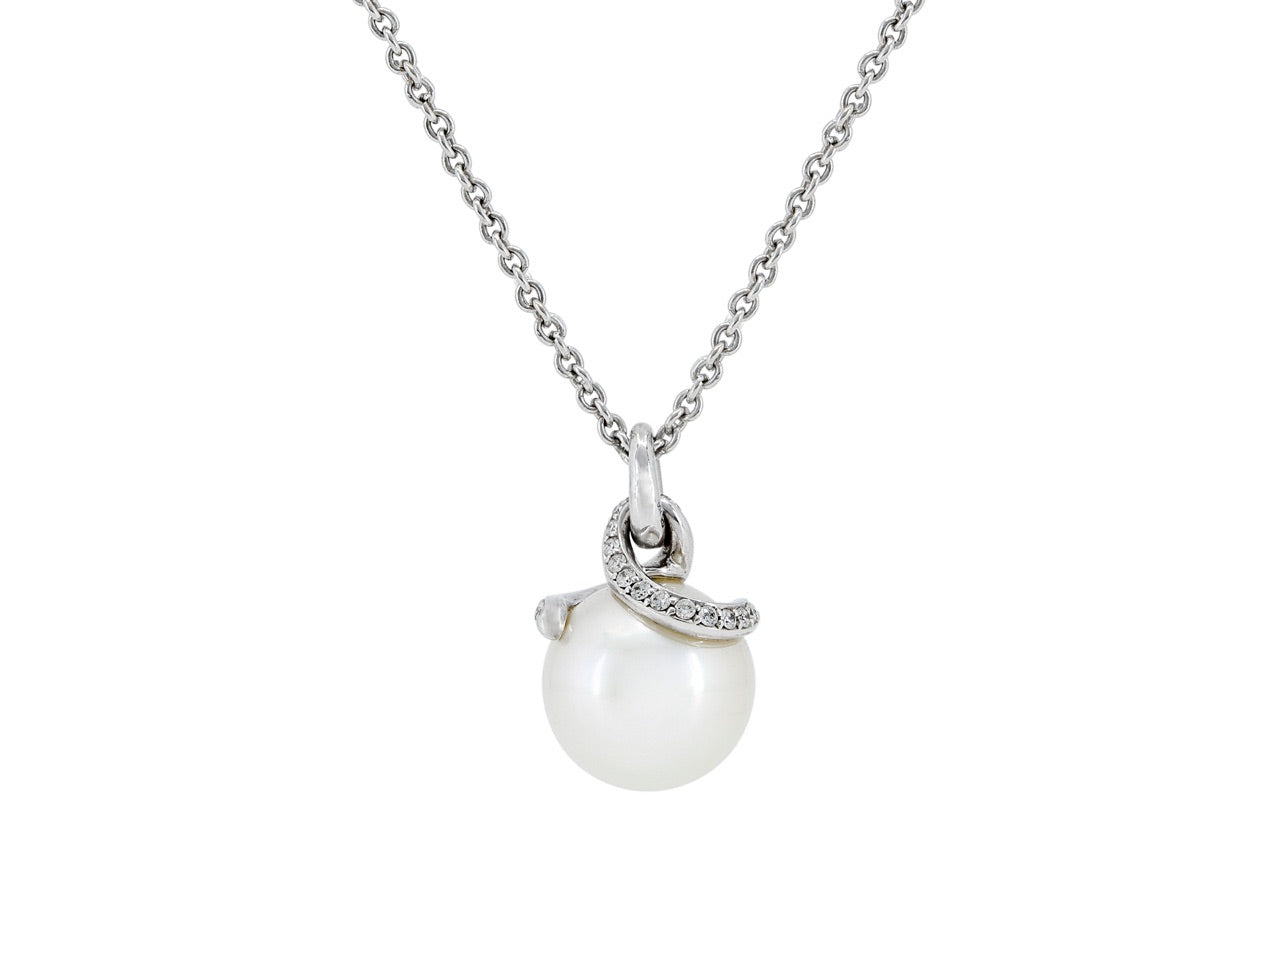 Mikimoto Pearl and Diamond Pendant in 18K White Gold